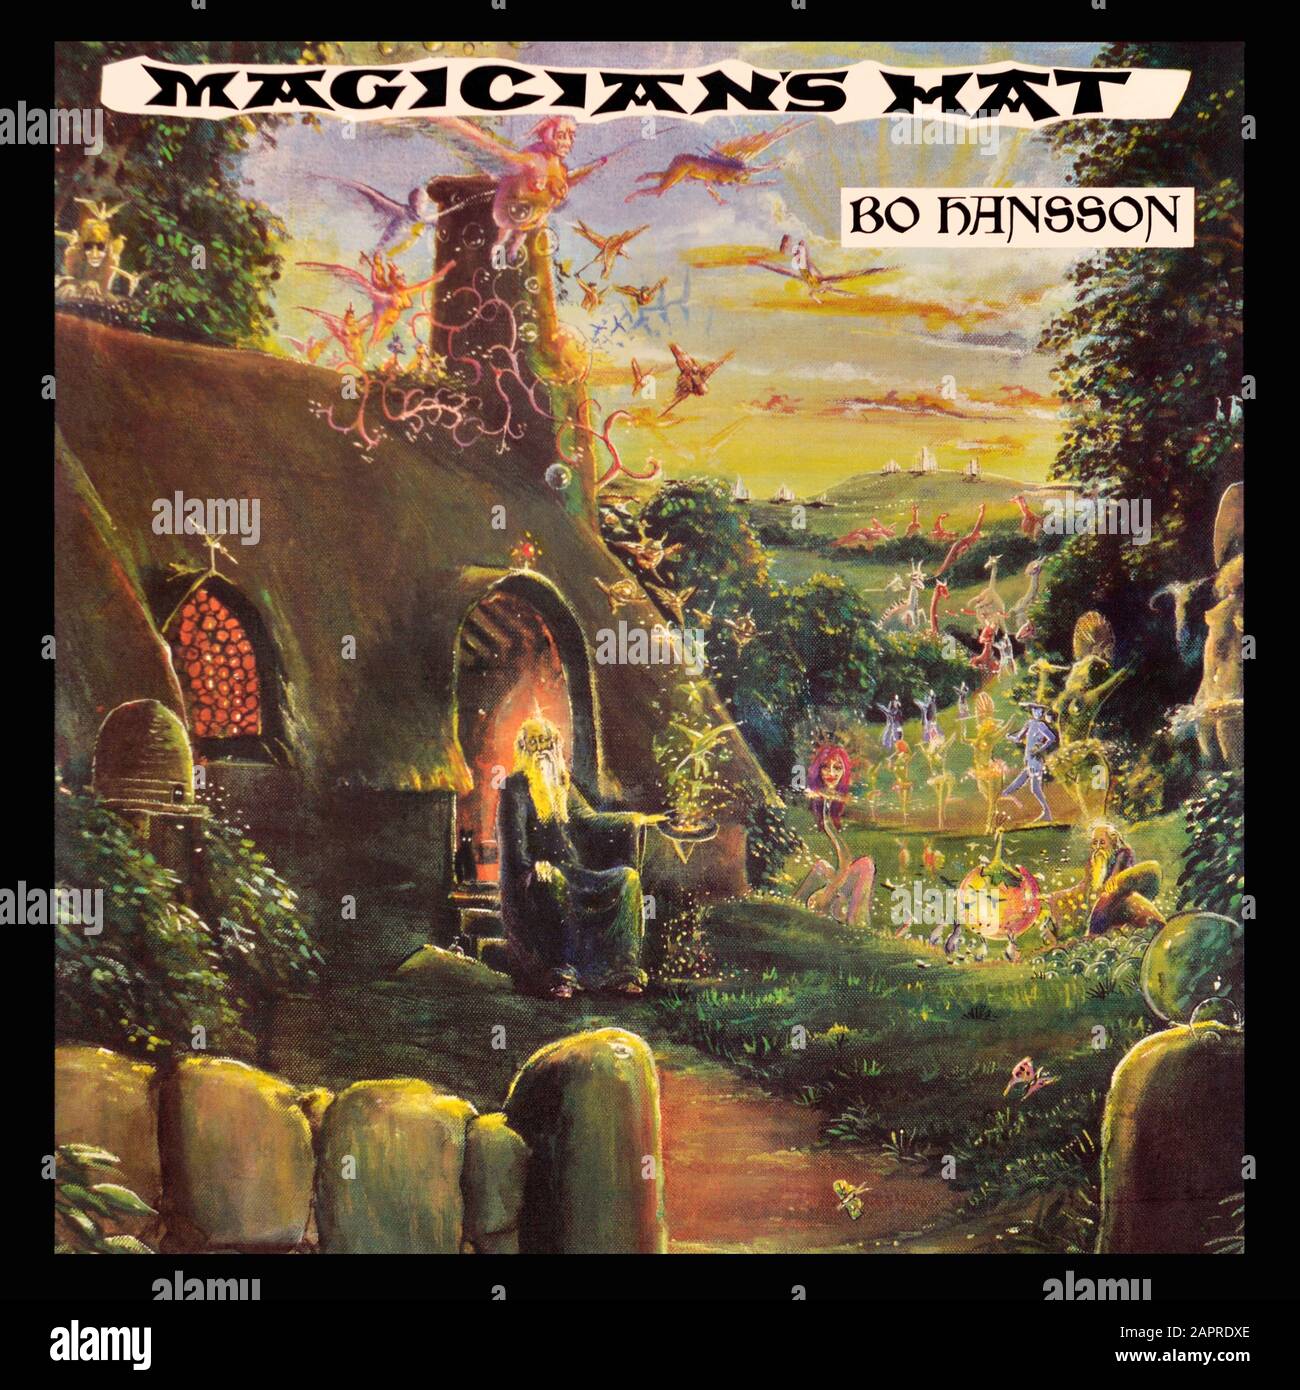 Bo Hansson - original Vinyl Album Cover - Magician's hat - 1973 Stockfoto